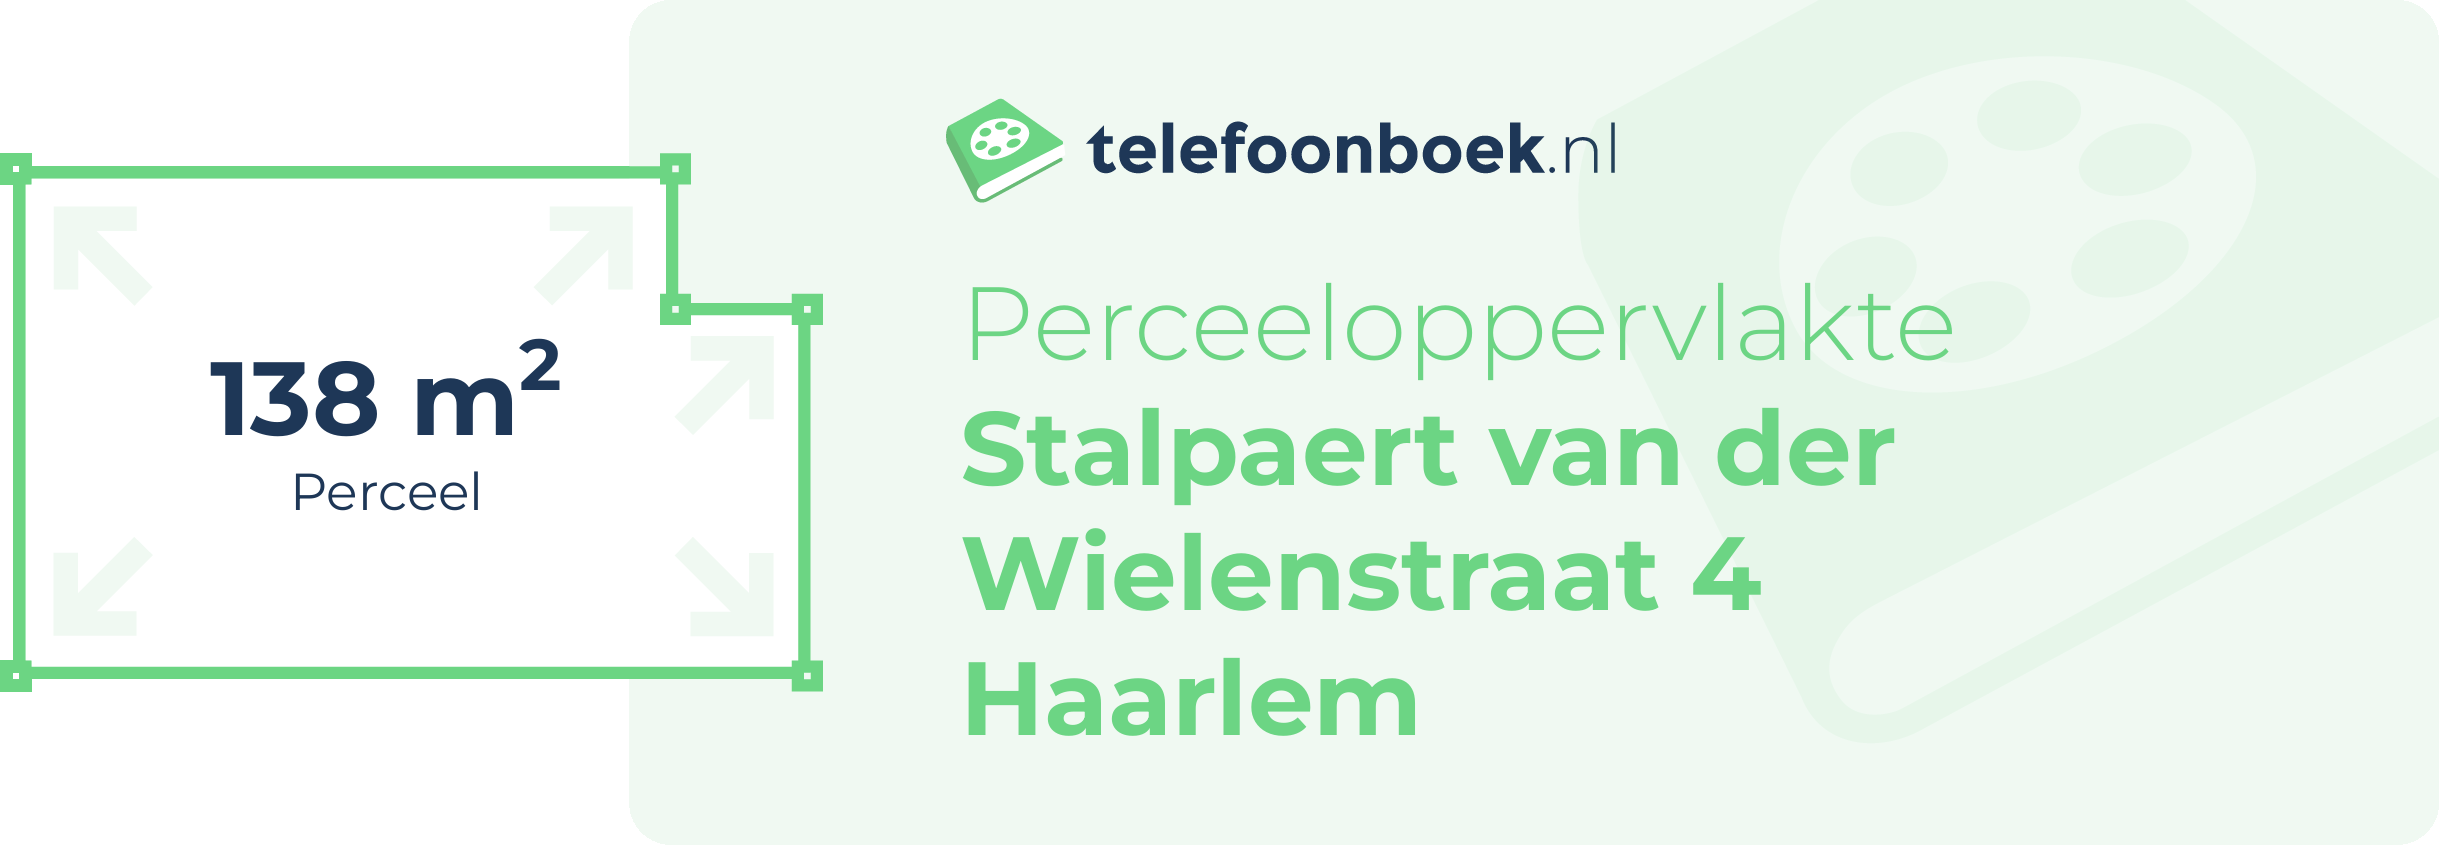 Perceeloppervlakte Stalpaert Van Der Wielenstraat 4 Haarlem